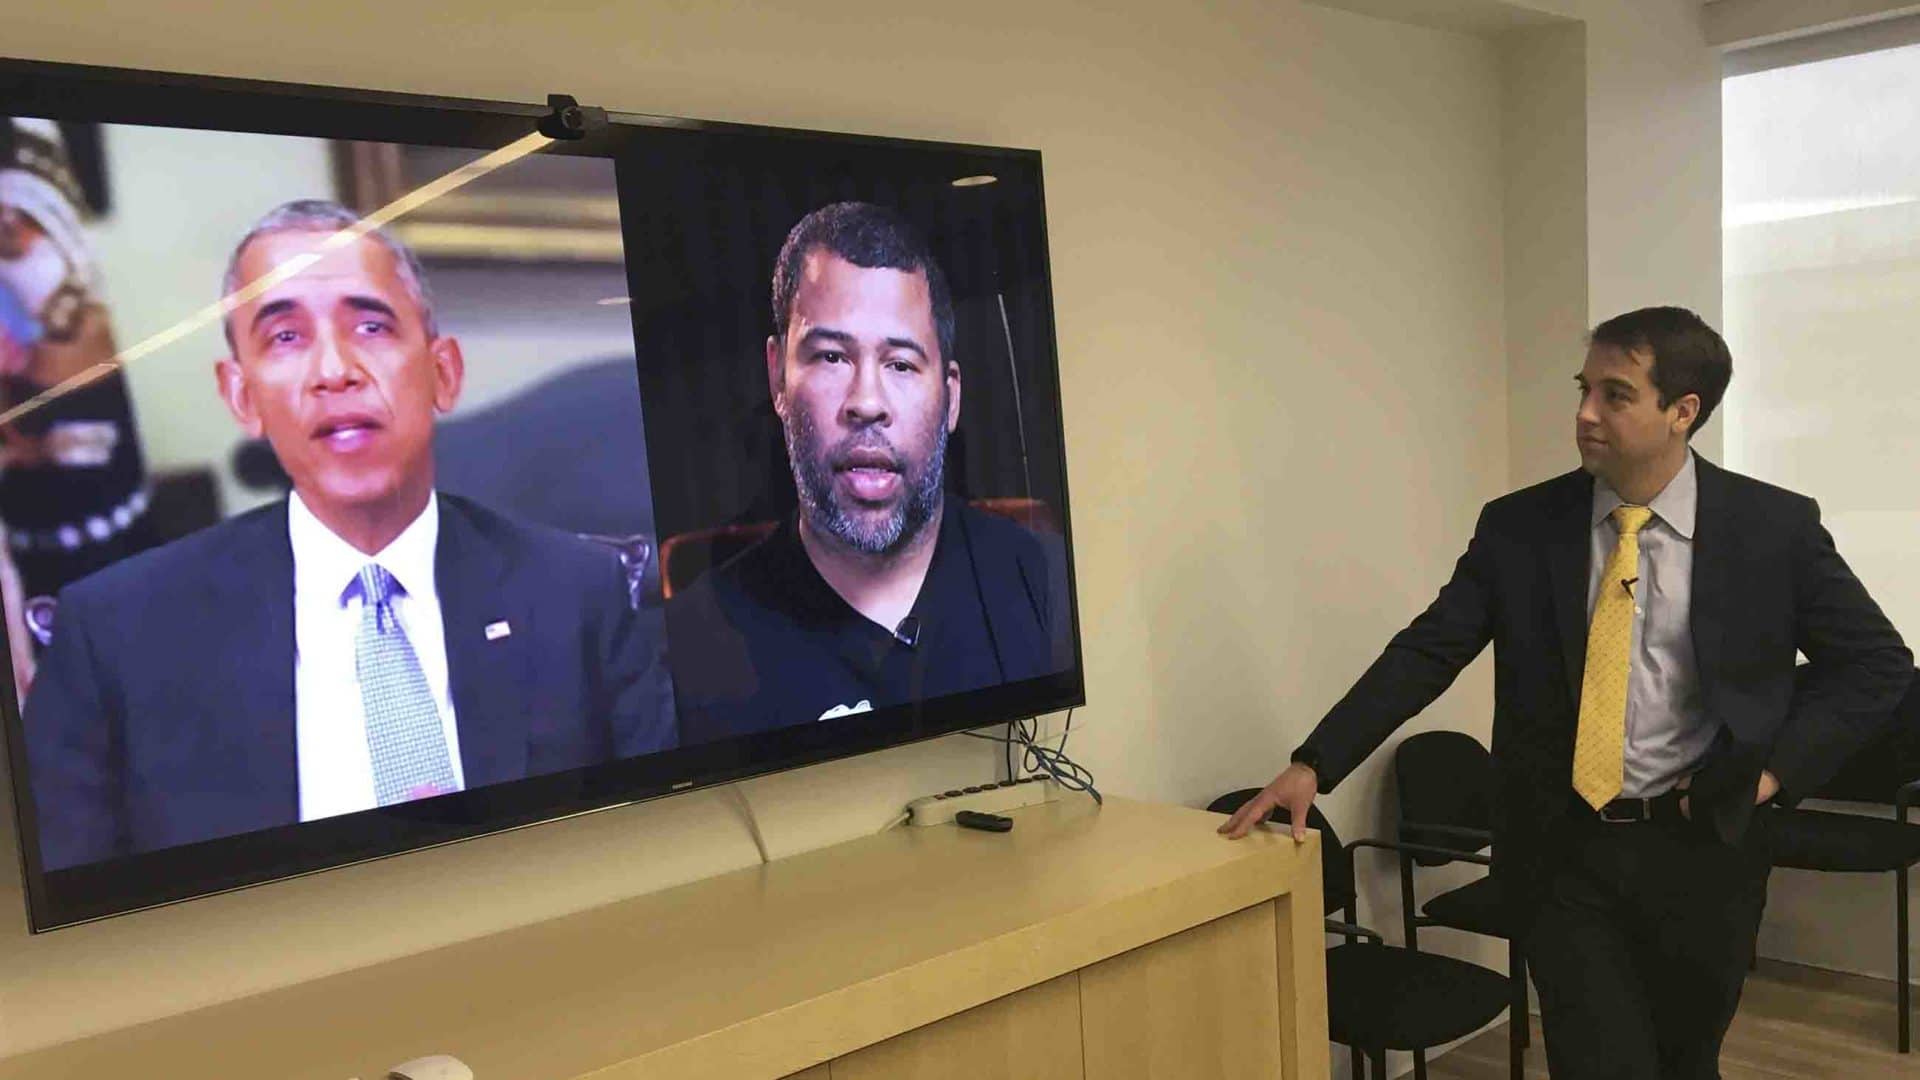 Paul Scharre of the Center for a New American Security views a deepfake video of filmmaker Jordan Peele giving a speech as former president Barack Obama.